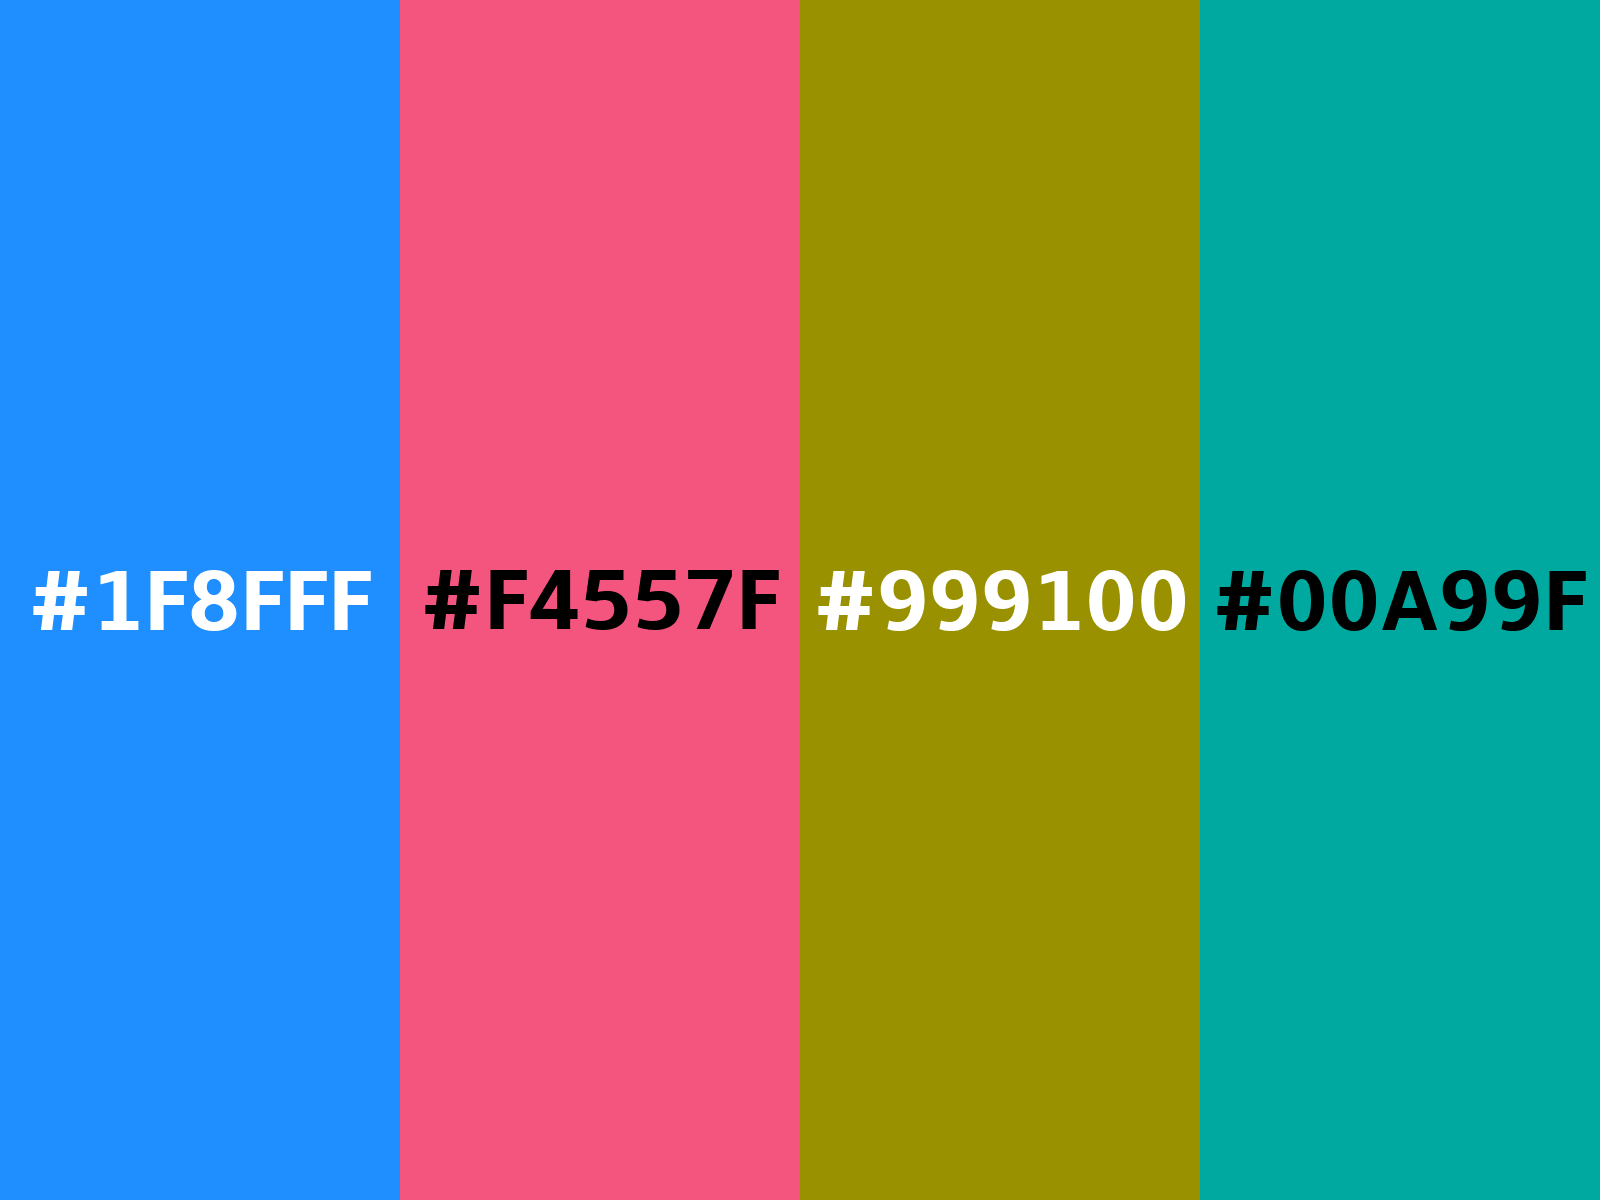 1F8FFF Hex Color, RGB: 31, 143, 255